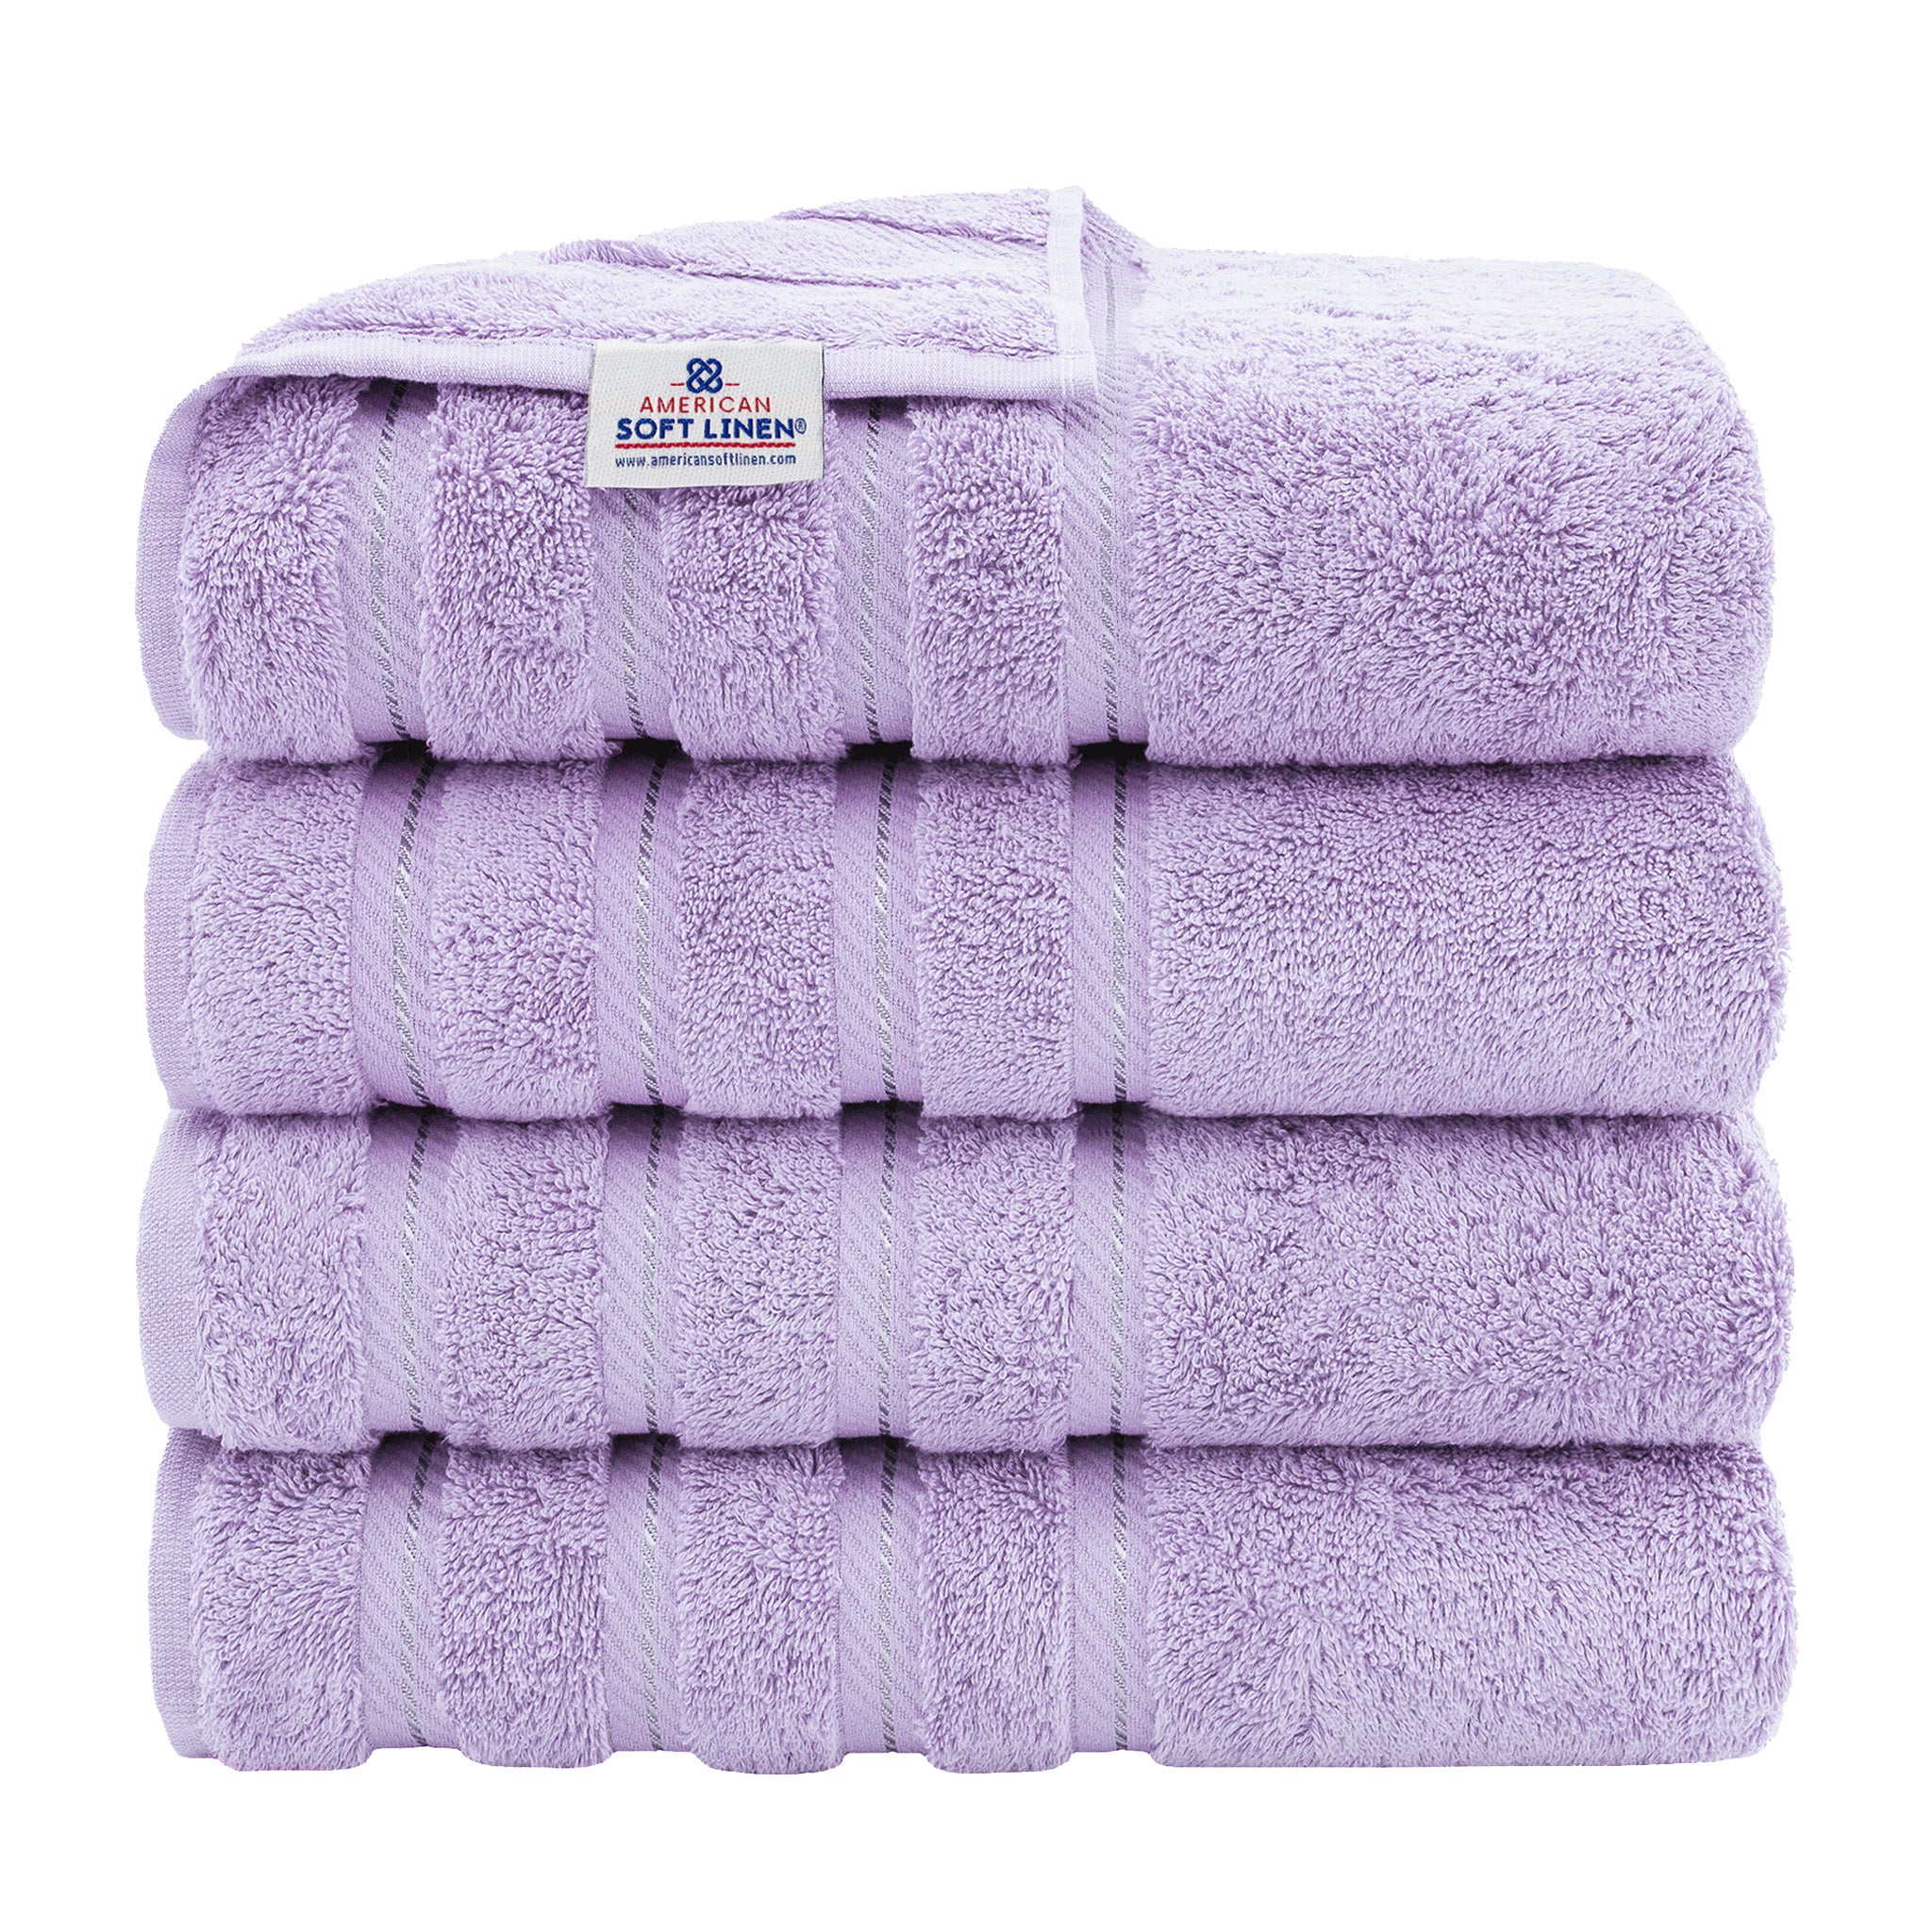 American Soft Linen 100% Turkish Cotton 4 Pack Bath Towel Set lilac-1